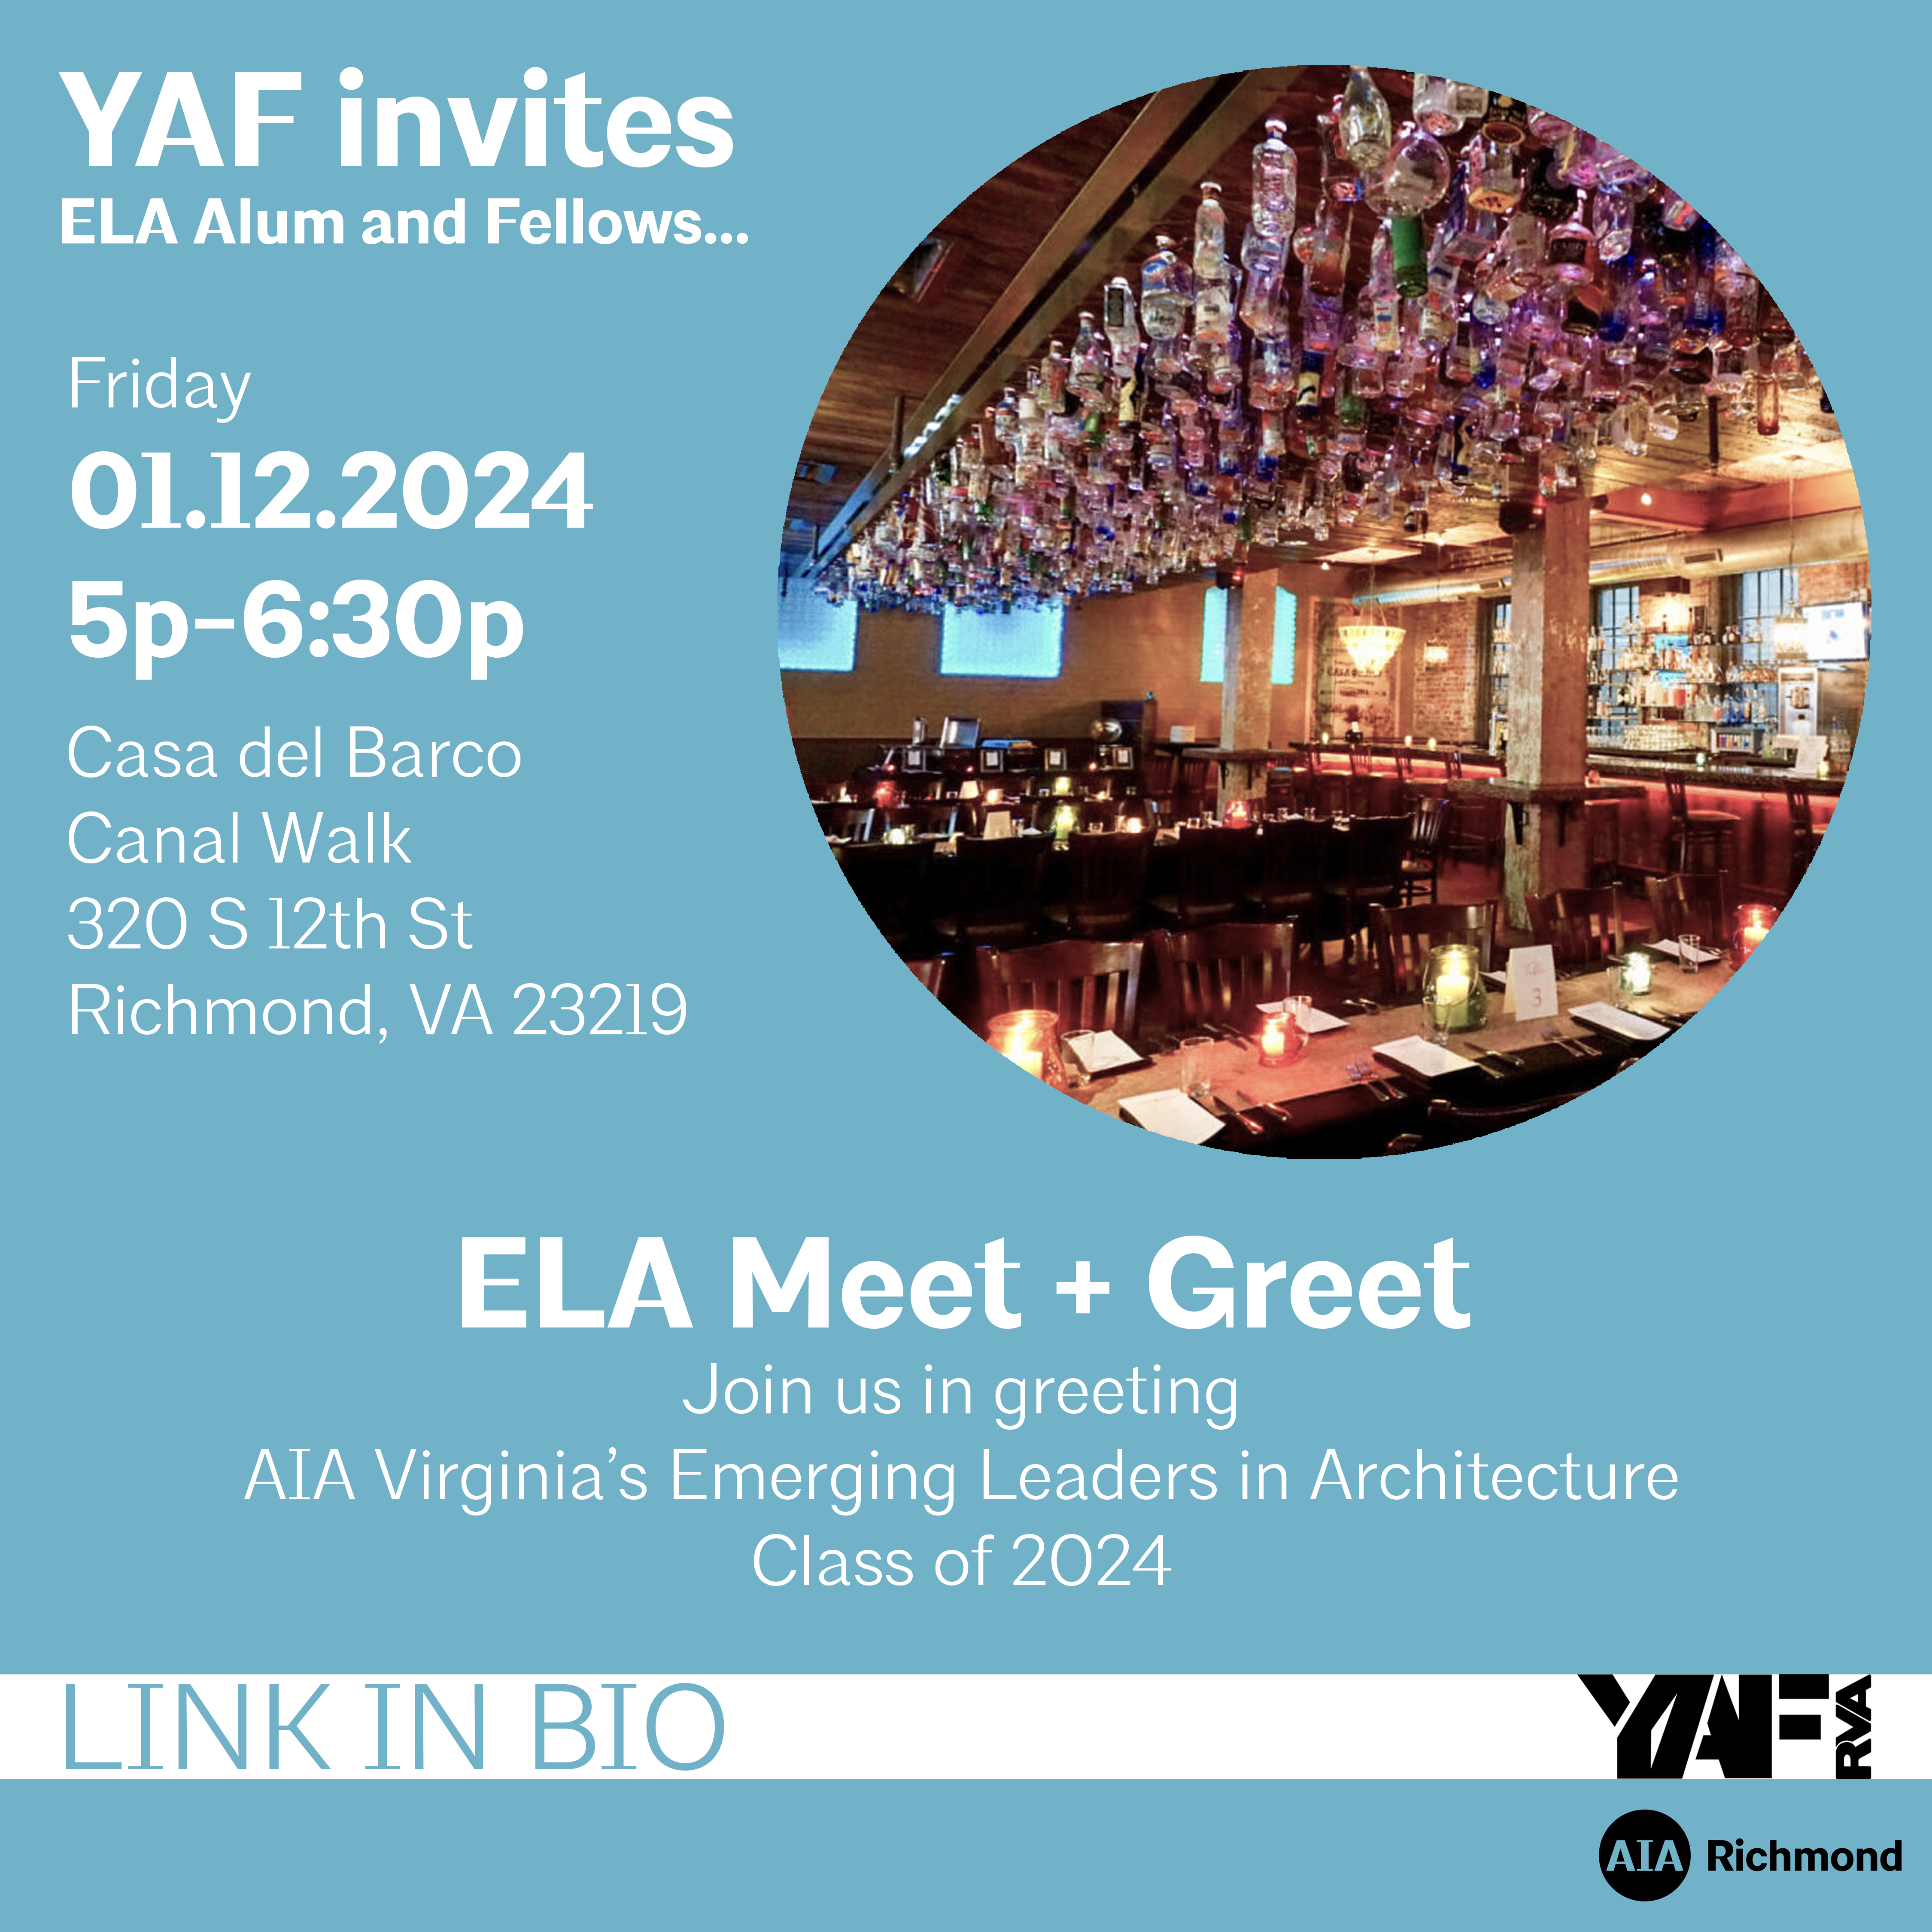 ELA Meet + Greet hosted by YAF RVA